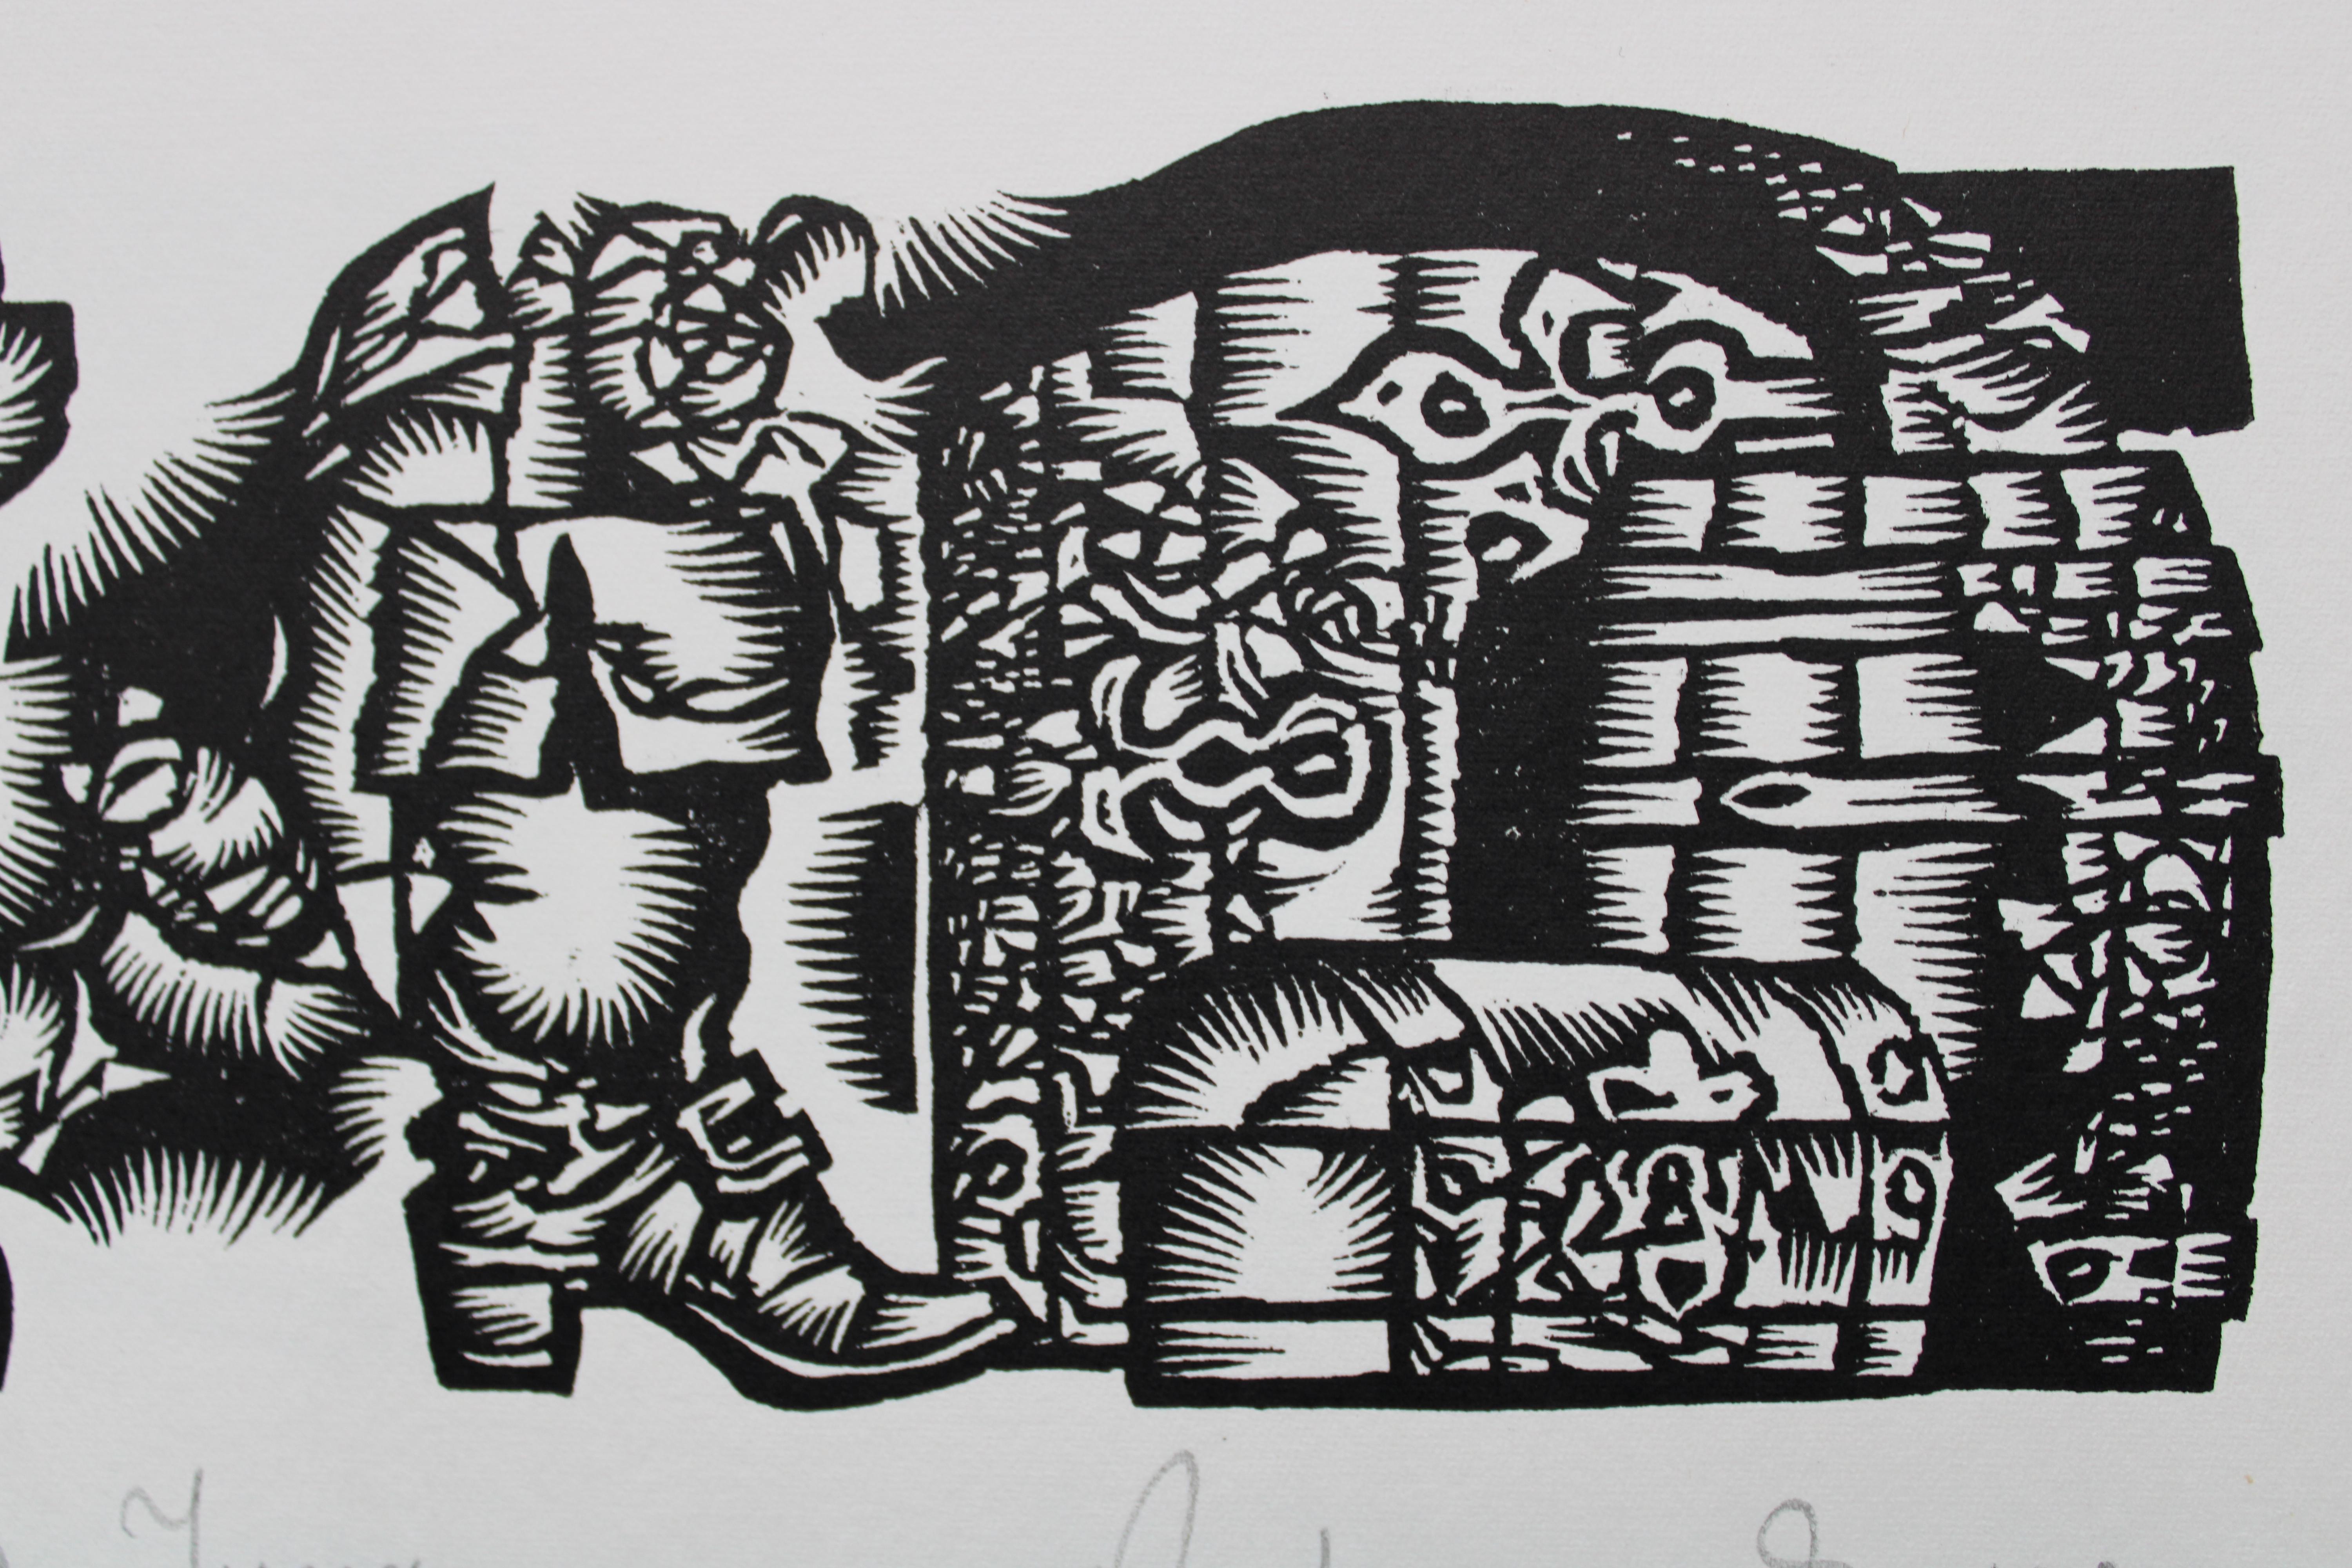 Herr des Hauses. 1982. Papier, Linolschnitt, 20x34 cm (Grau), Print, von Dainis Rozkalns